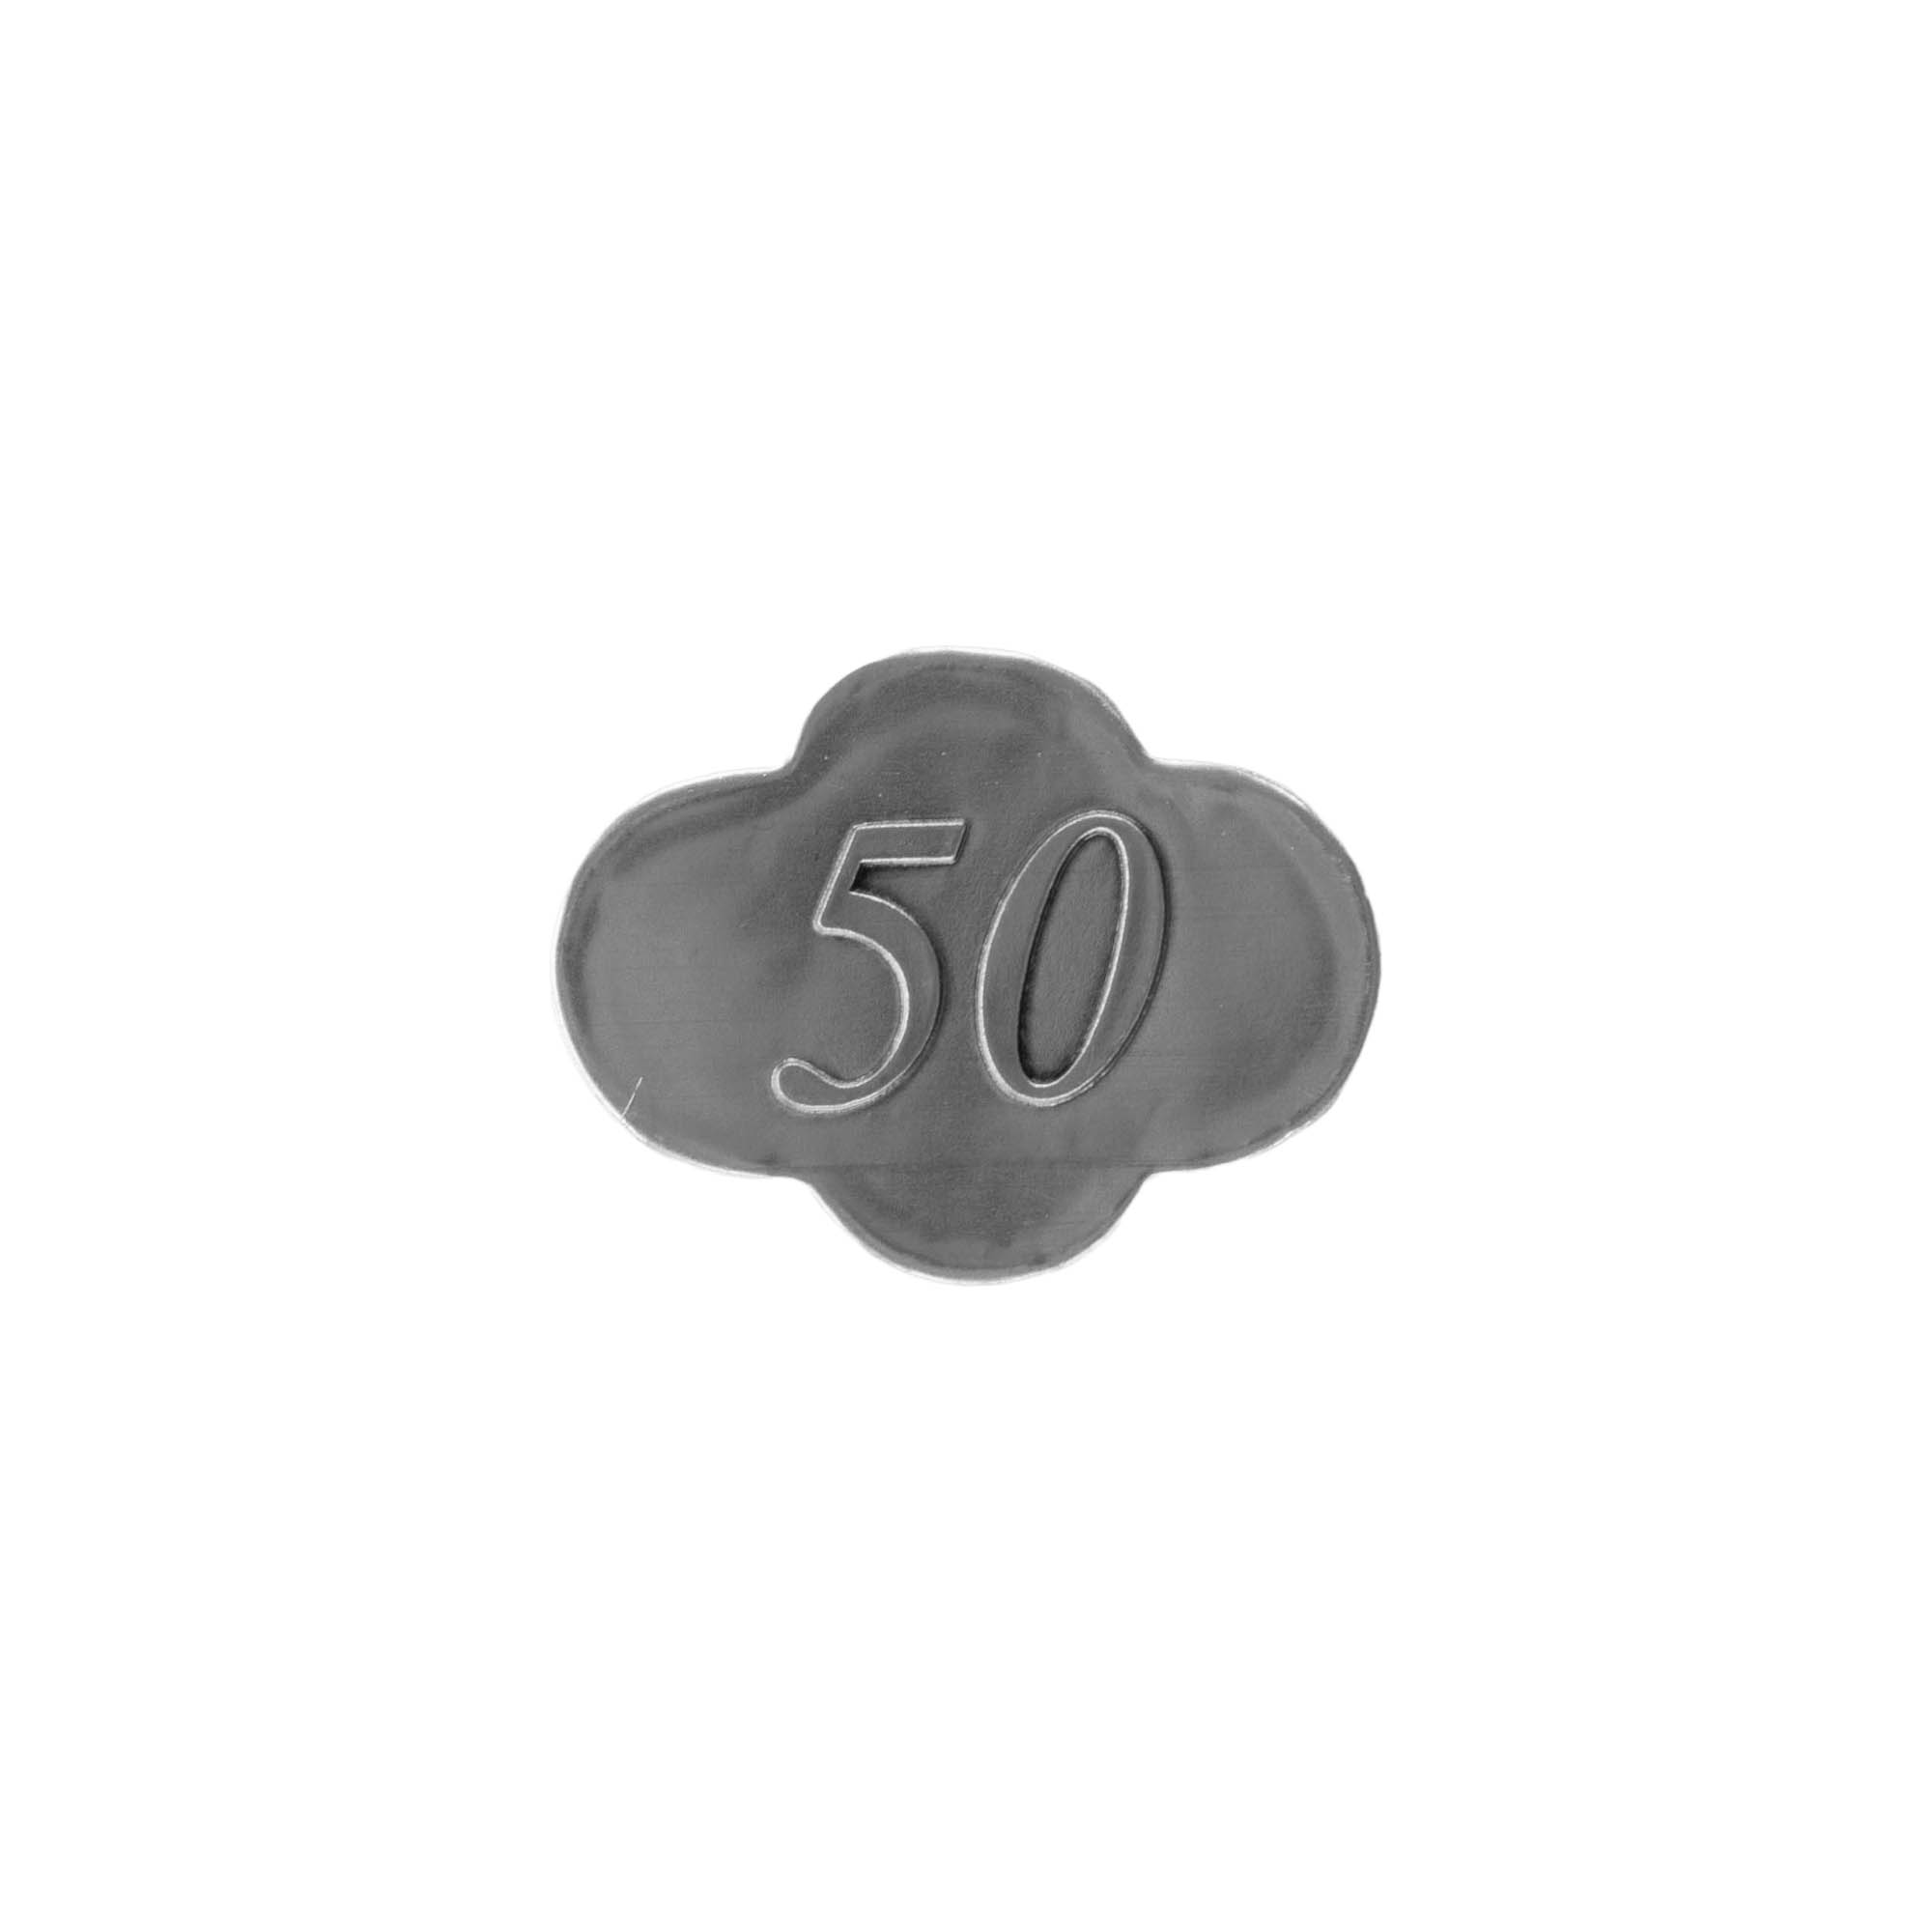 Tinetiket '50', kvadratisk, metal, sølv